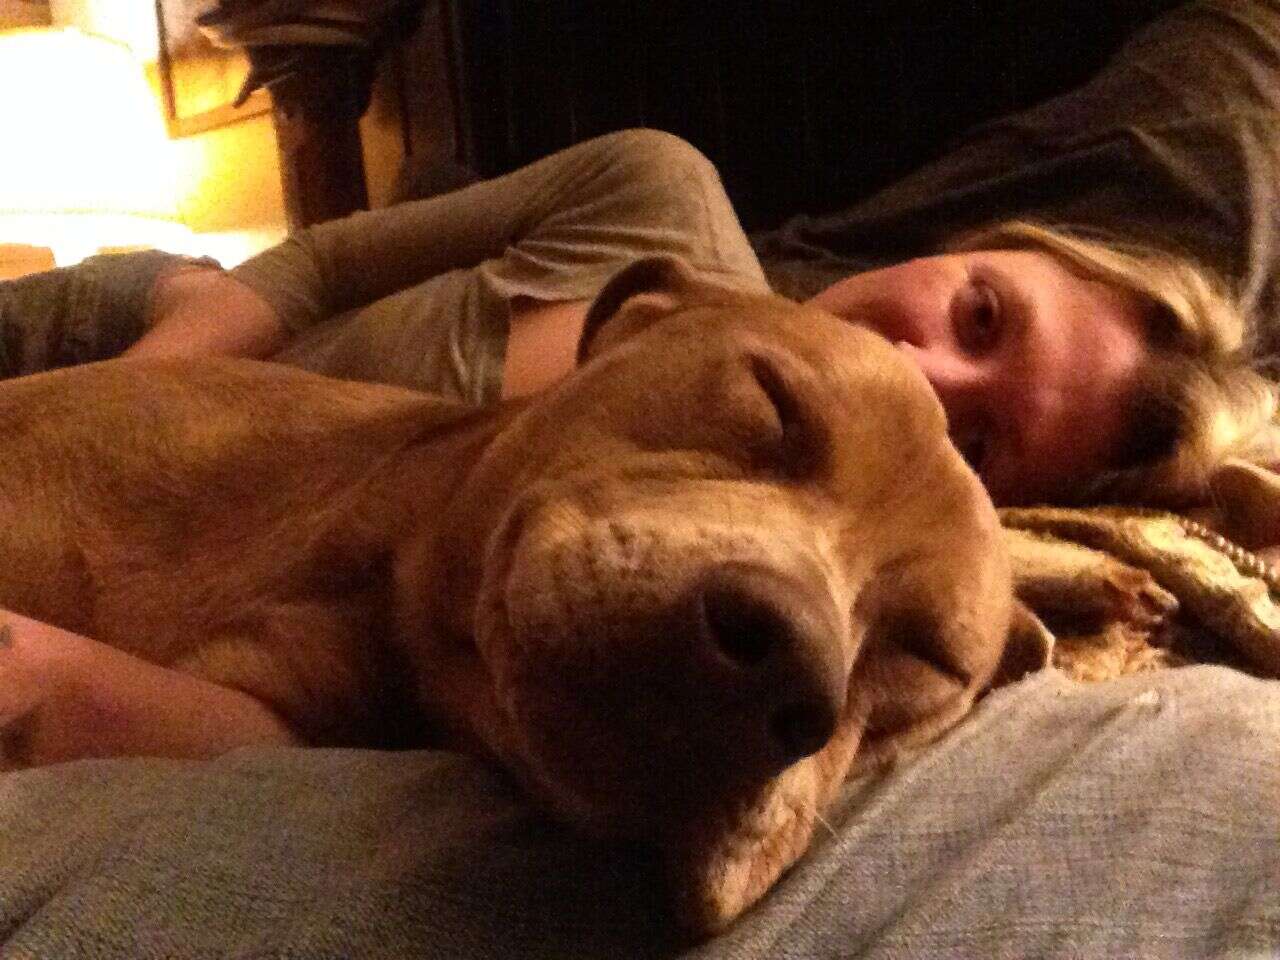 Dog cuddling with woman